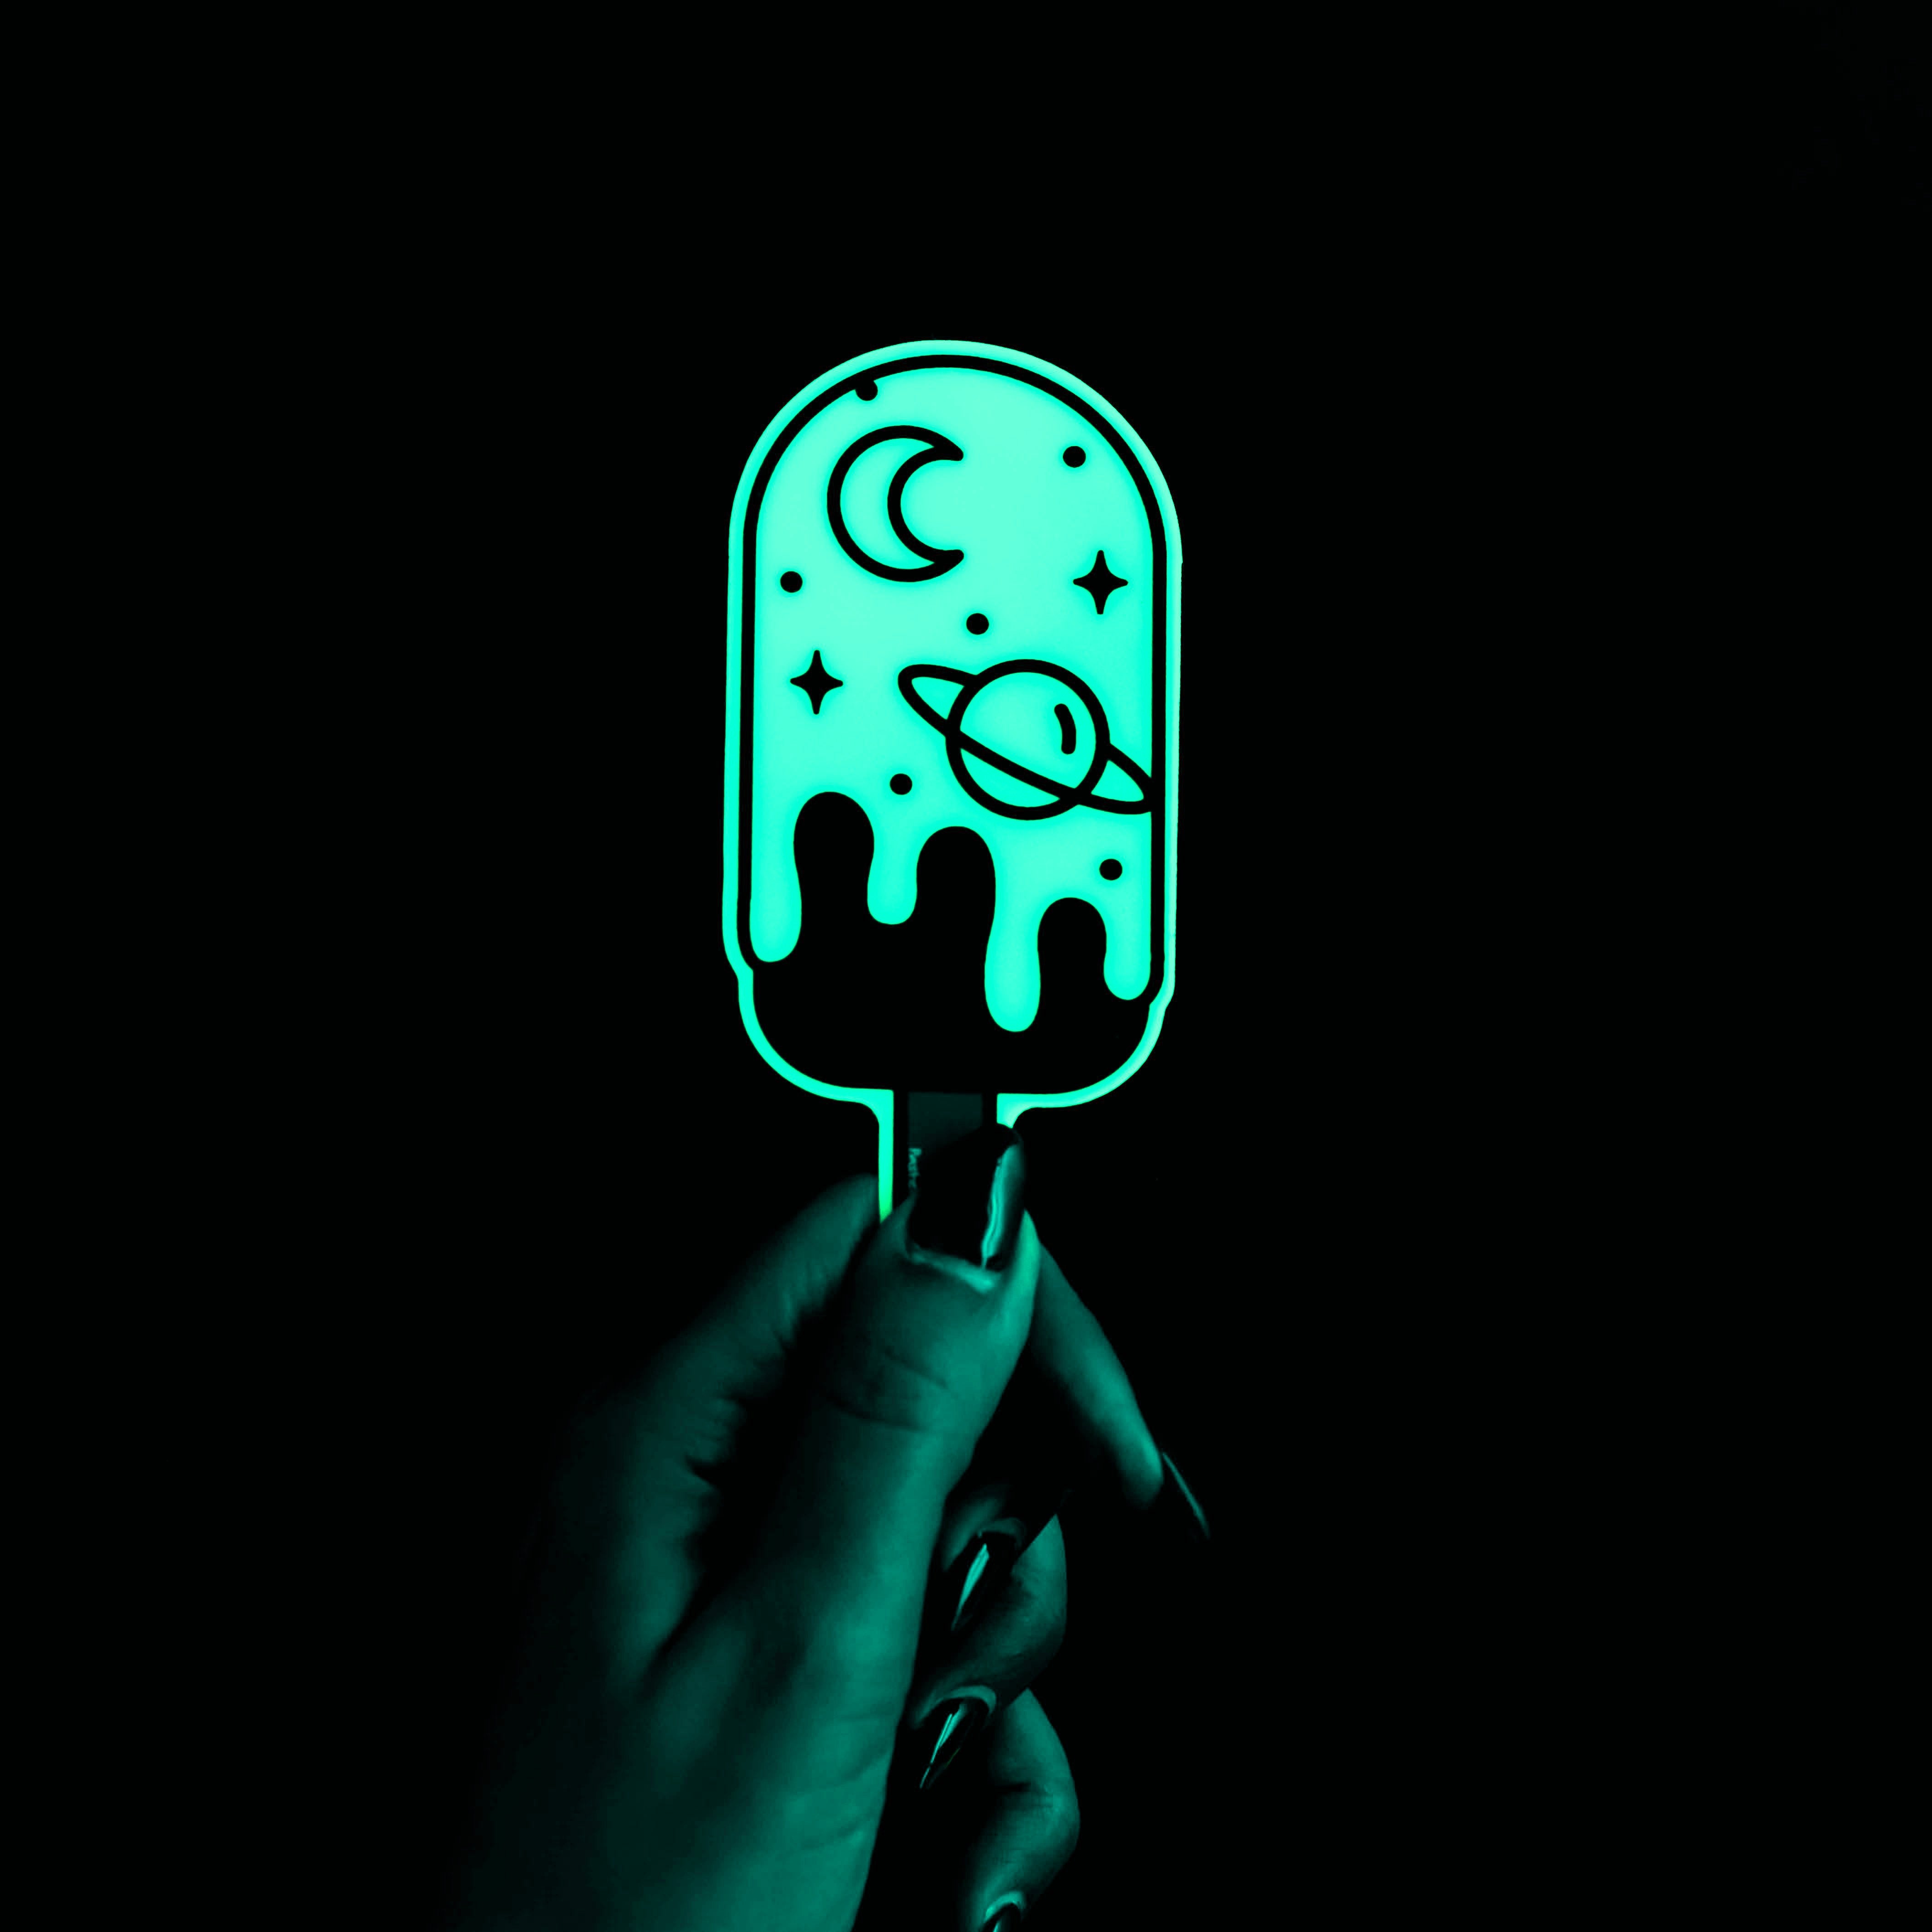 Glow in the dark stickers (Industrial grade *new*)